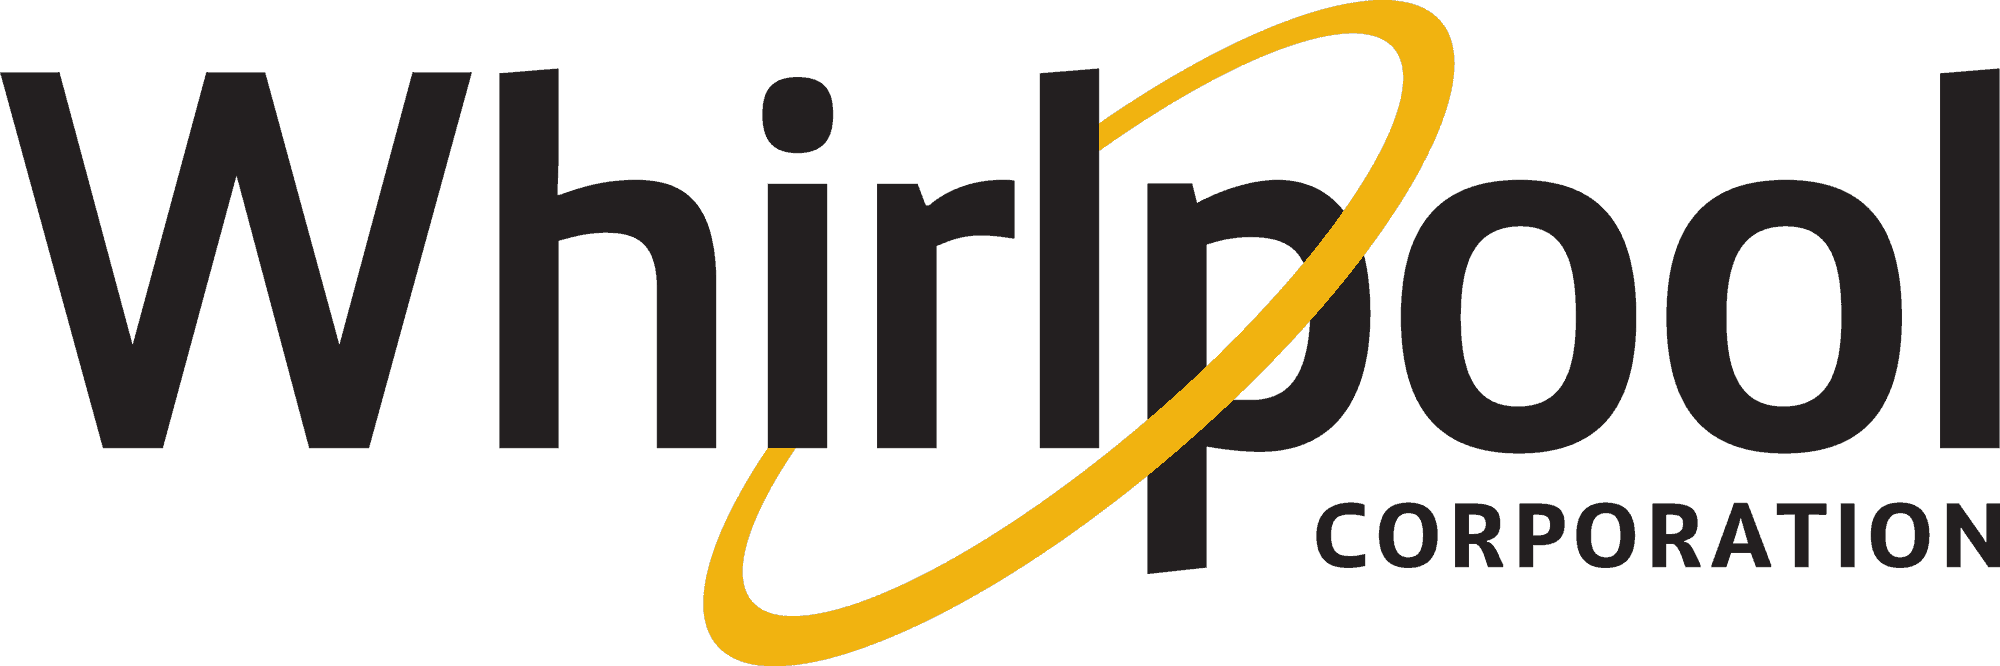 Whirlpool Corporation company name